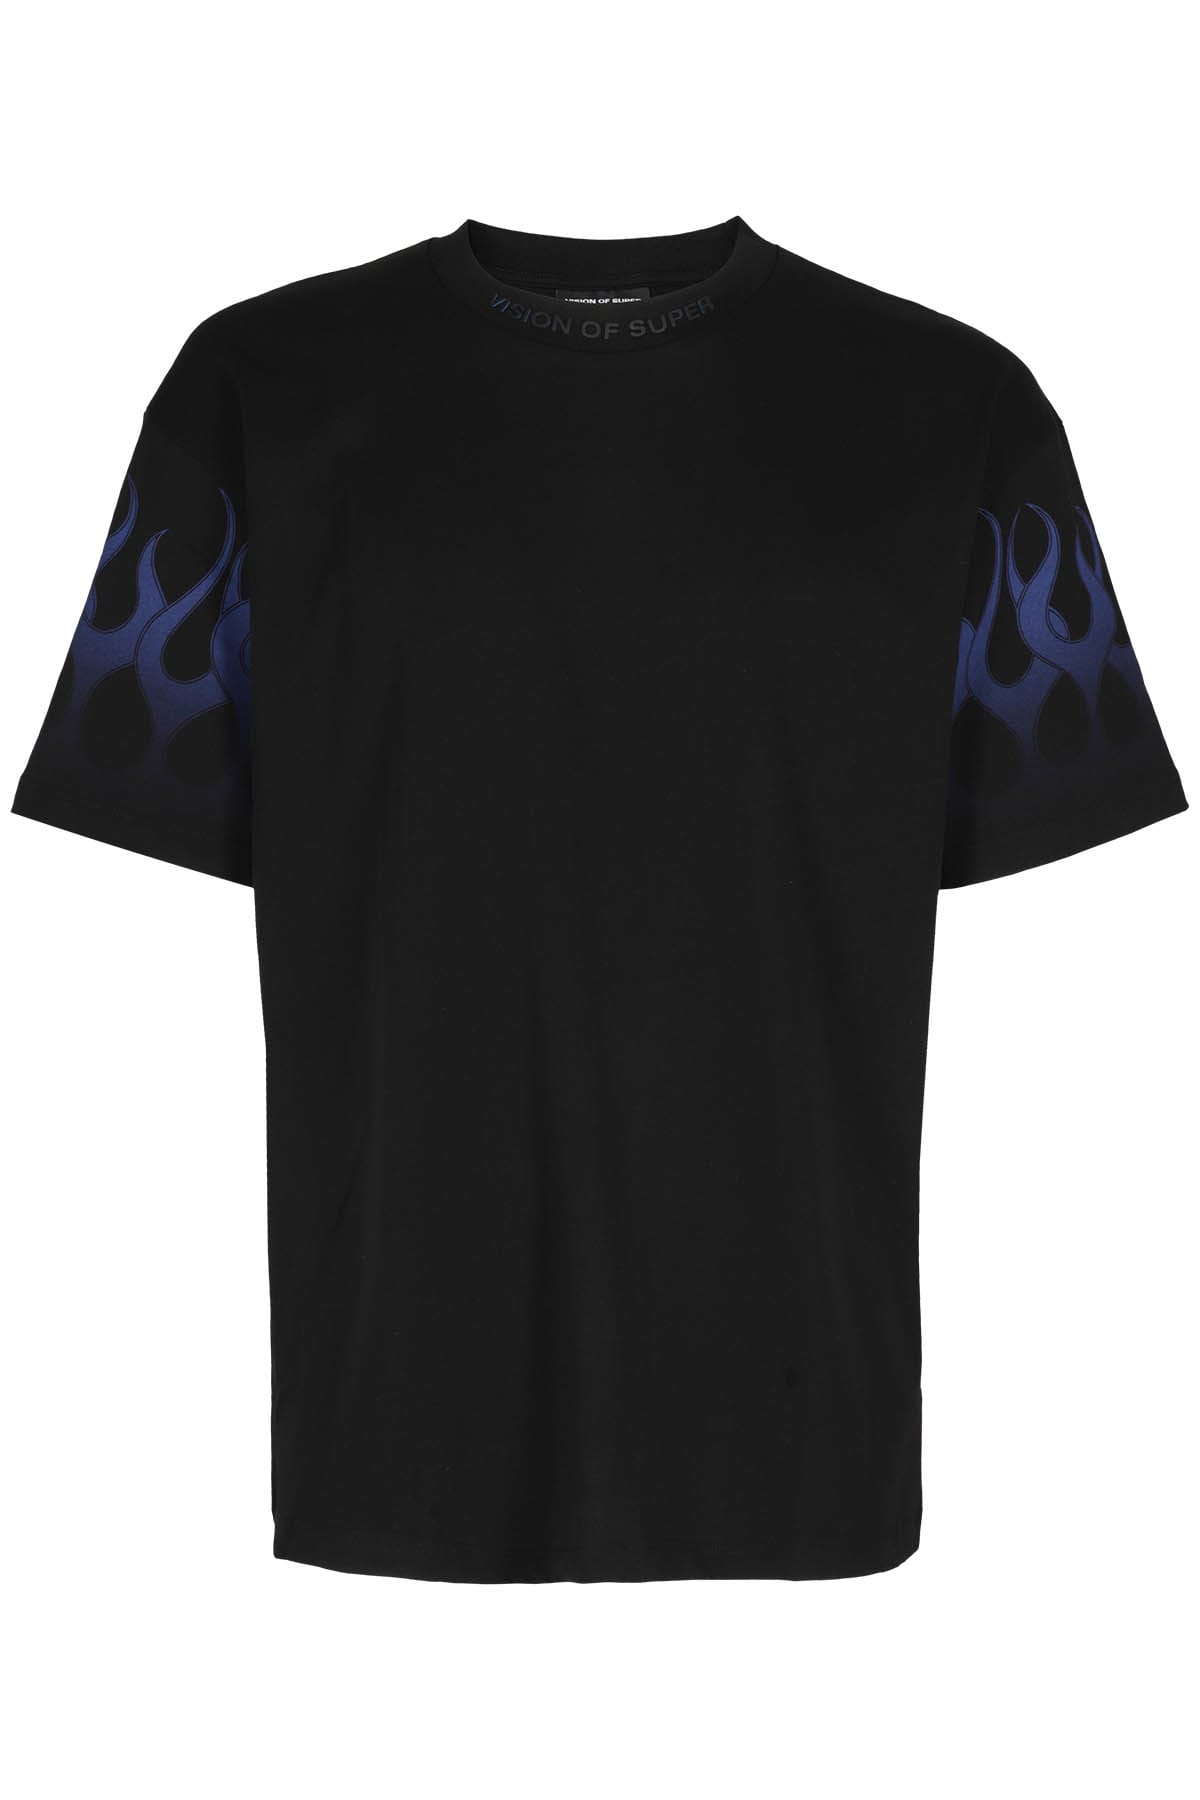 Shop Vision Of Super Black Tshirt With Blue Flames In Black Blue